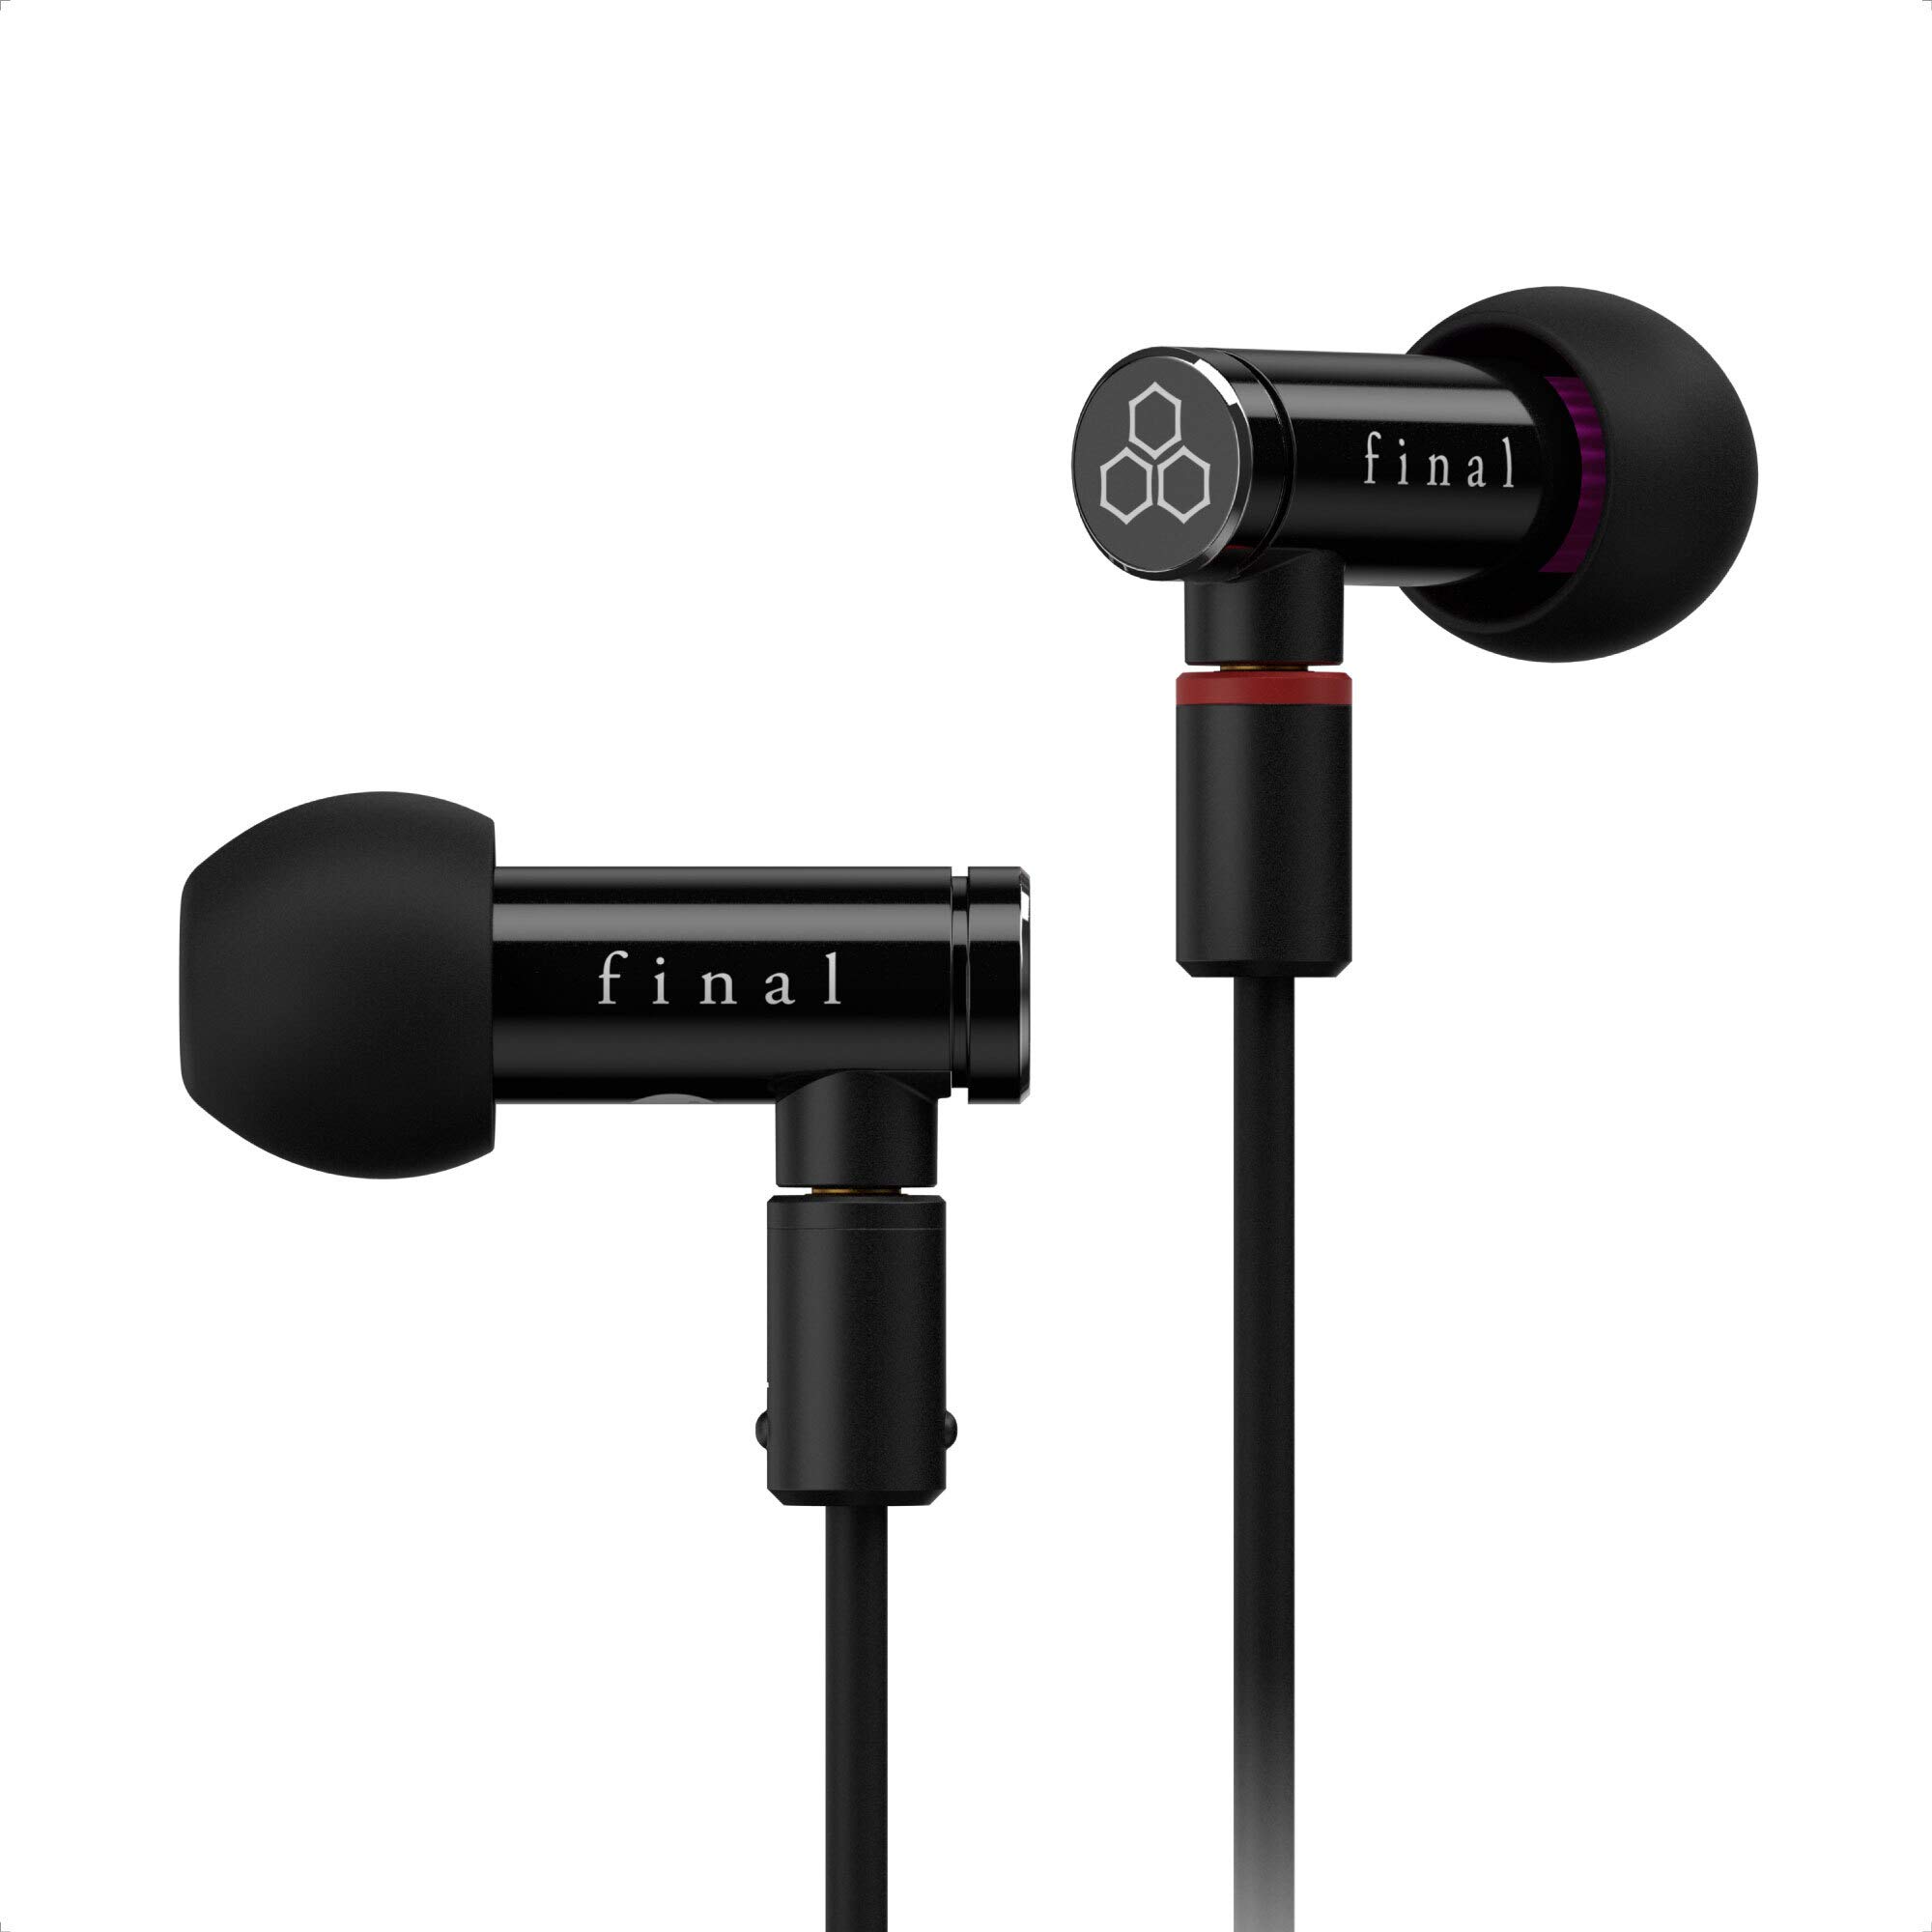 Final Audio Design سماعات الأذن E4000 عالية الدقة عازلة للصوت داخل الأذن